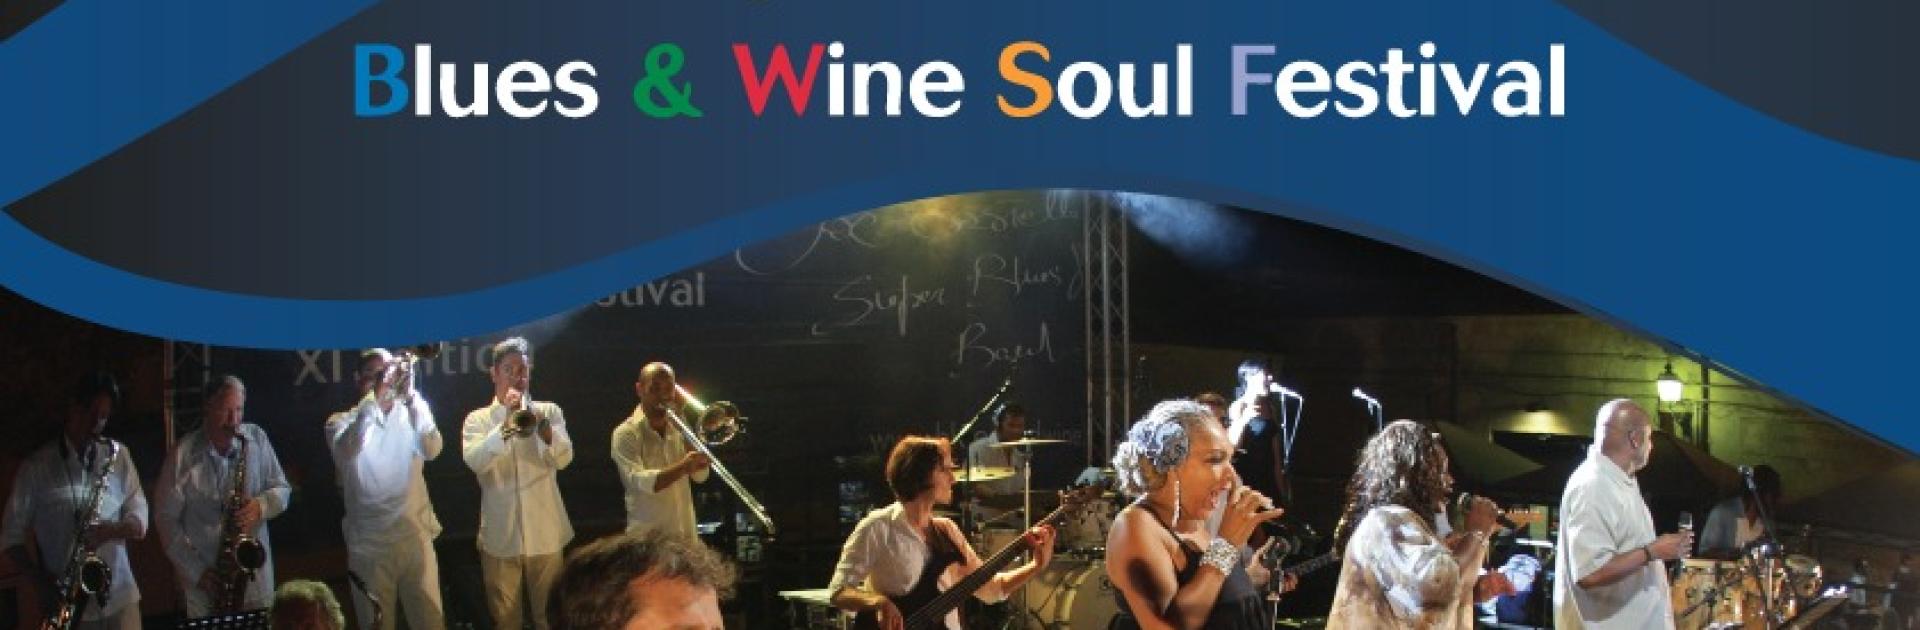 sanpietrotaormina it blues-wine-soul-festival 007